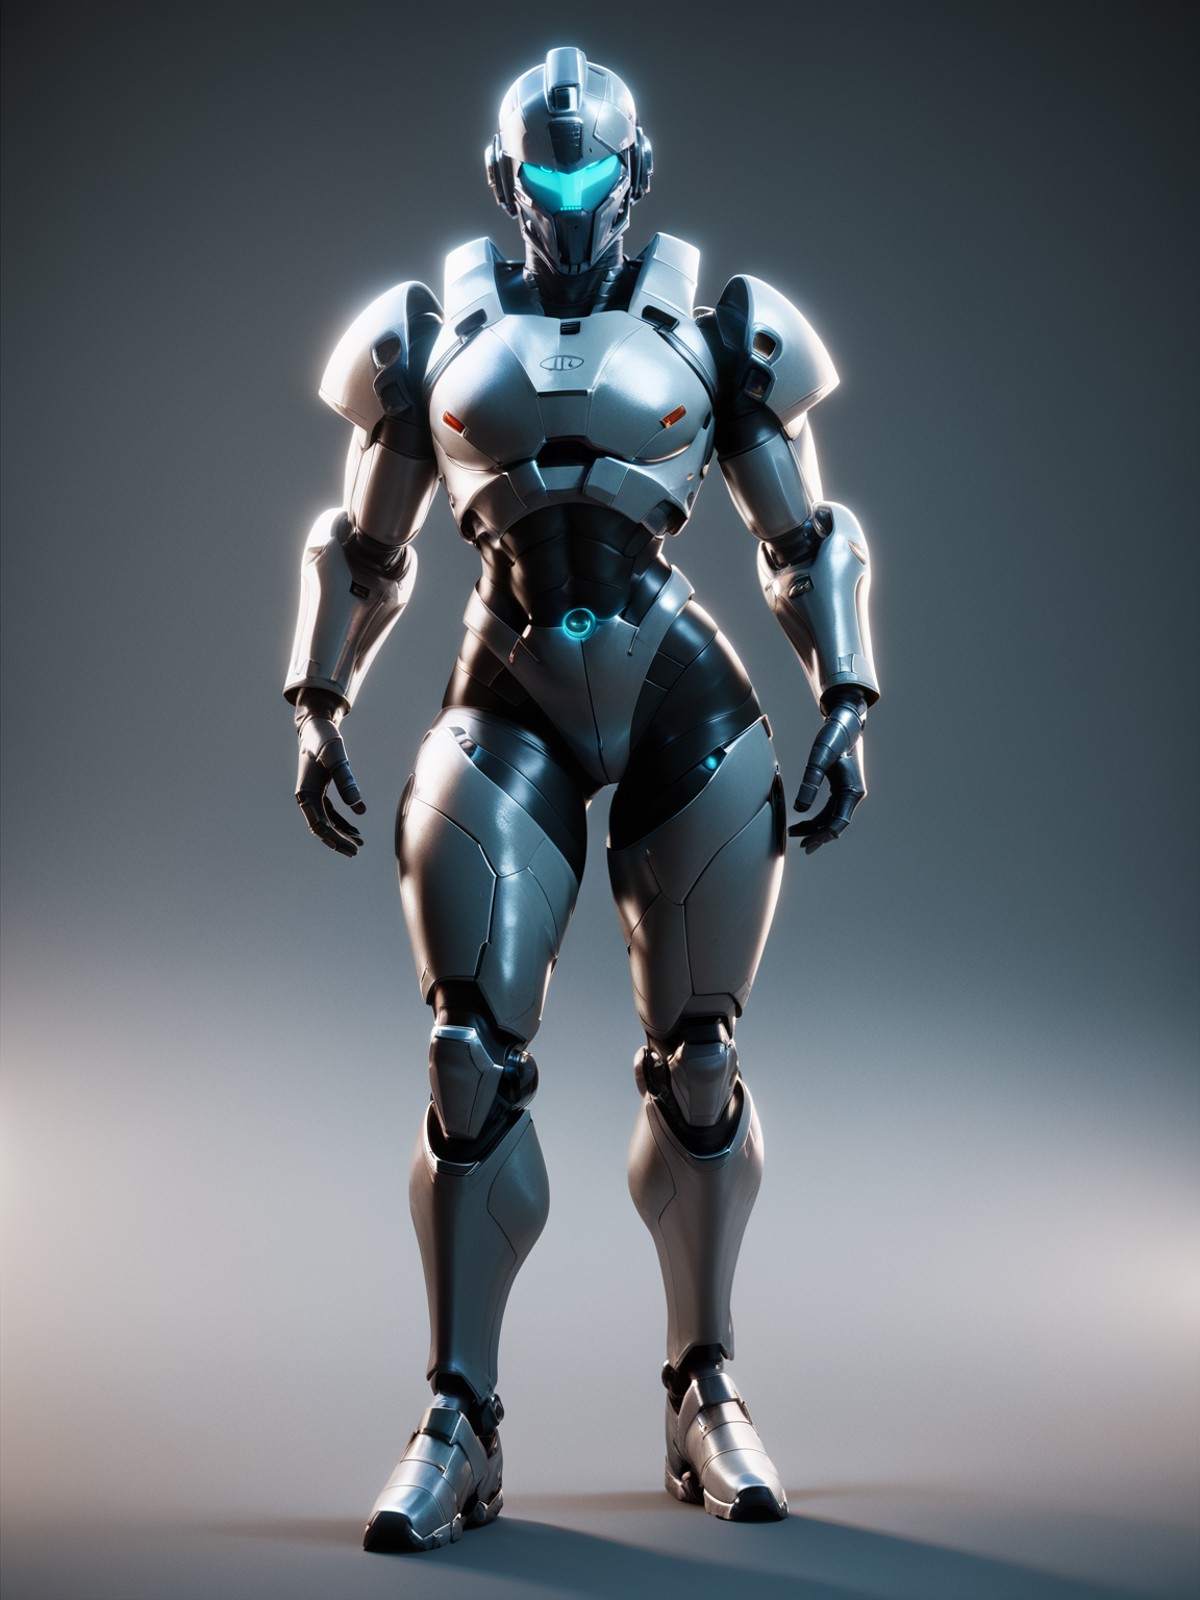 score_8_up, score_7_up, 3d render of robot, full body, helmet, simple background